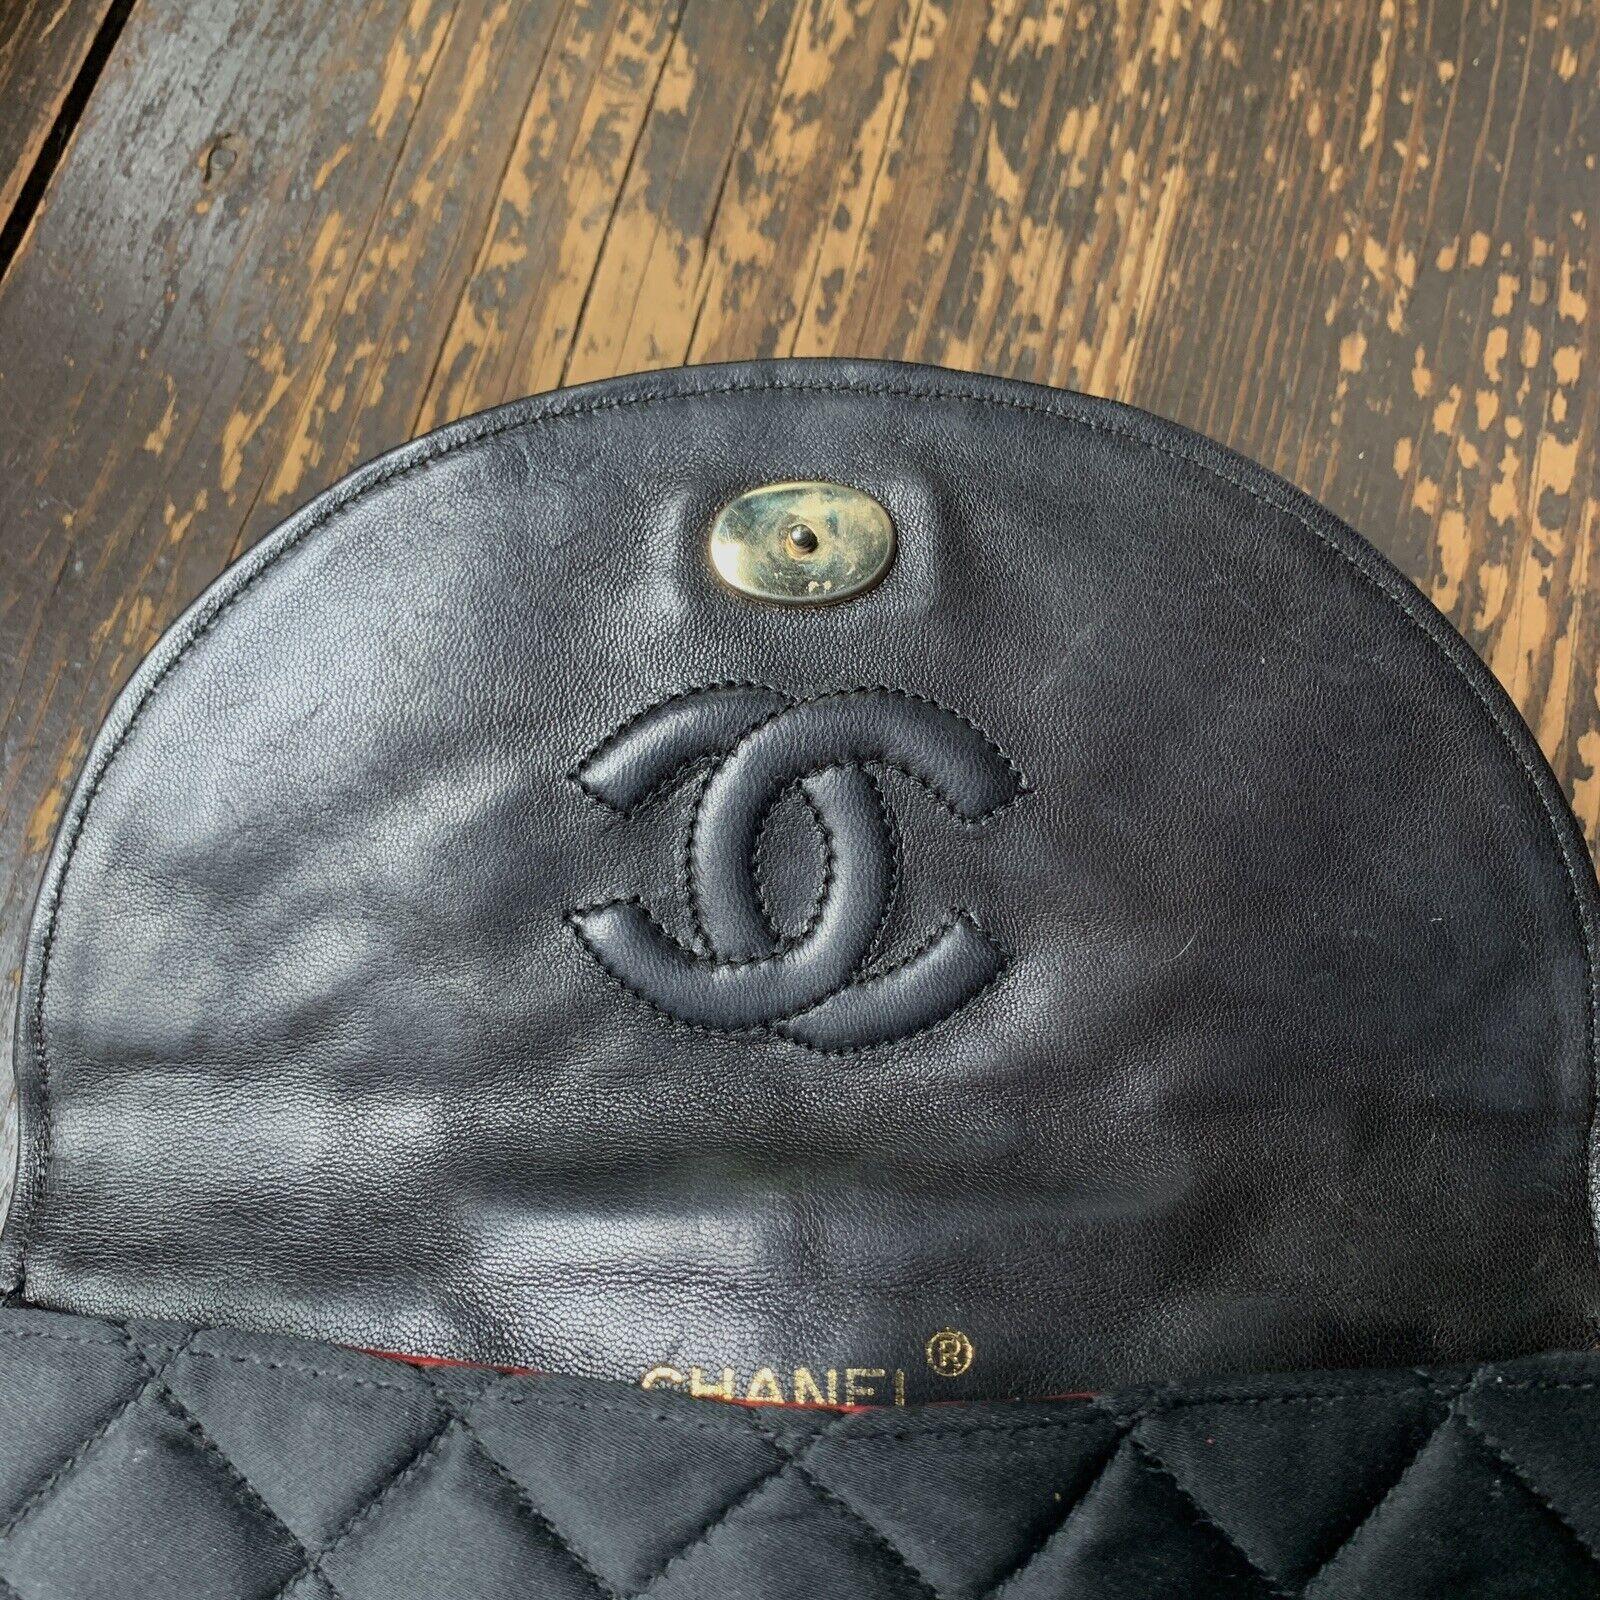 CHANEL Authentic RARE CC Logo VINTAGE 1980s Black Satin Handbag Purse ITALY For Sale 11